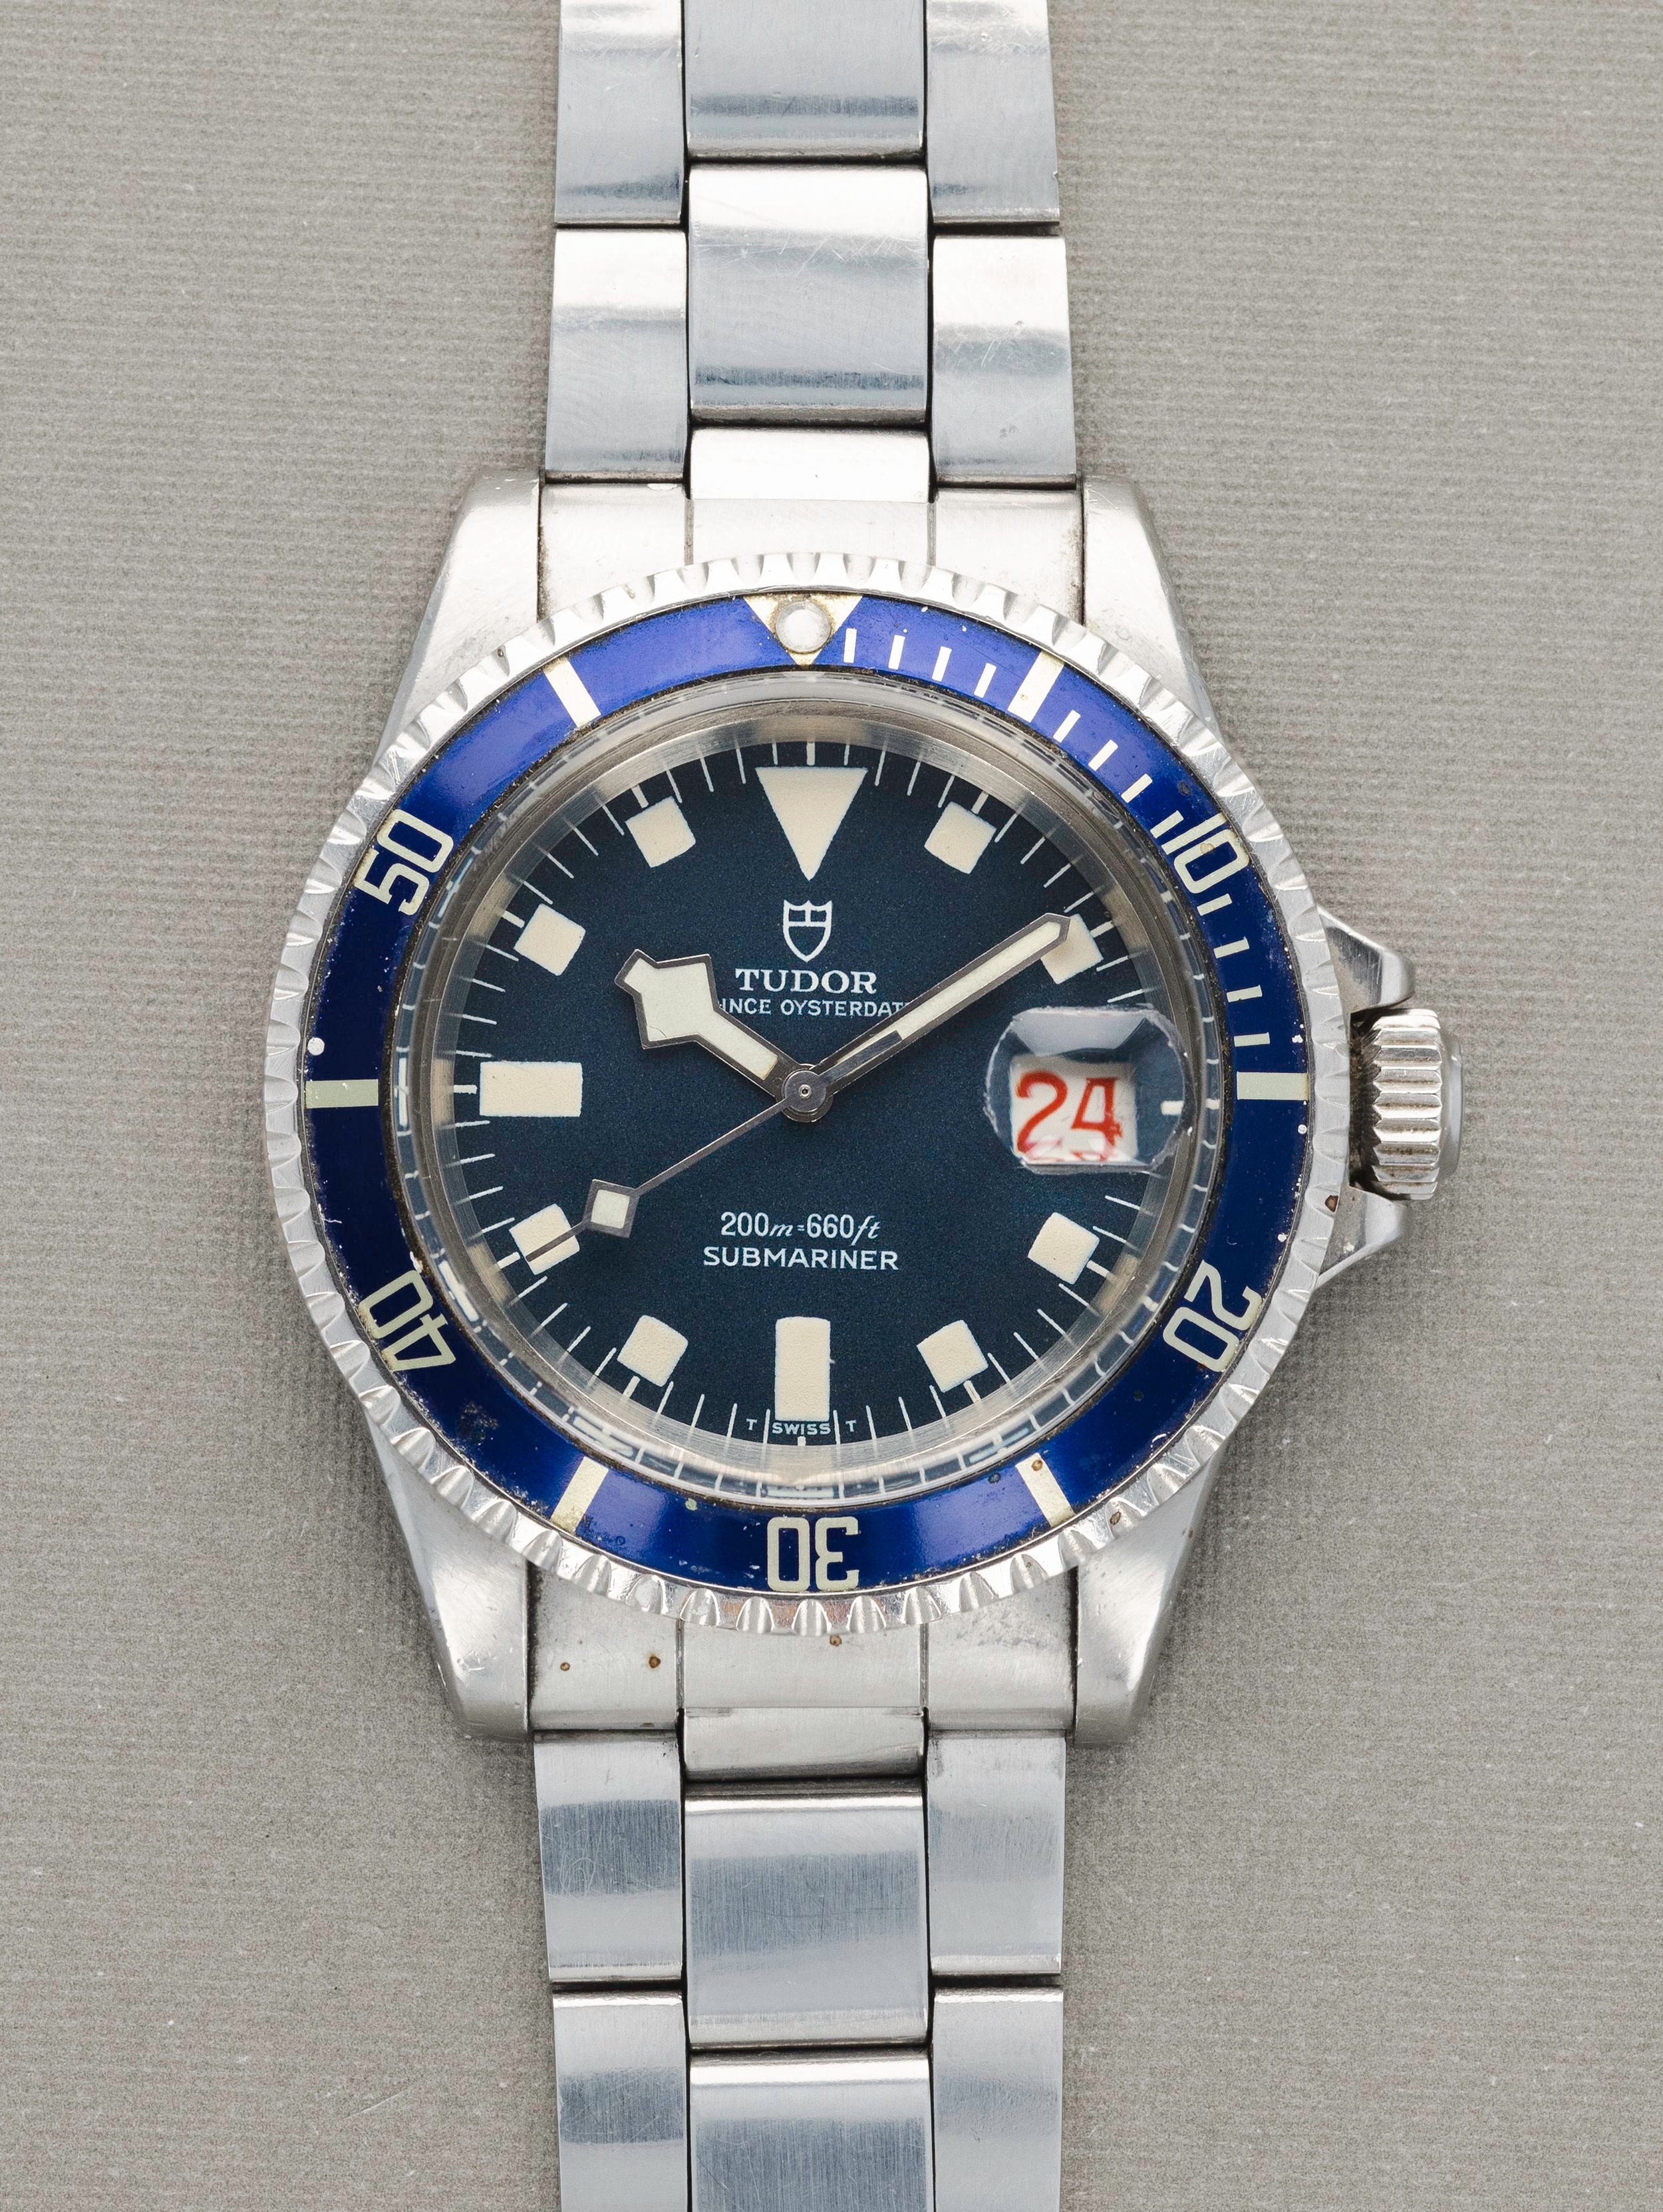 Tudor Submariner Ref. 7021/0 - Blue Snowflake, Roulette Date